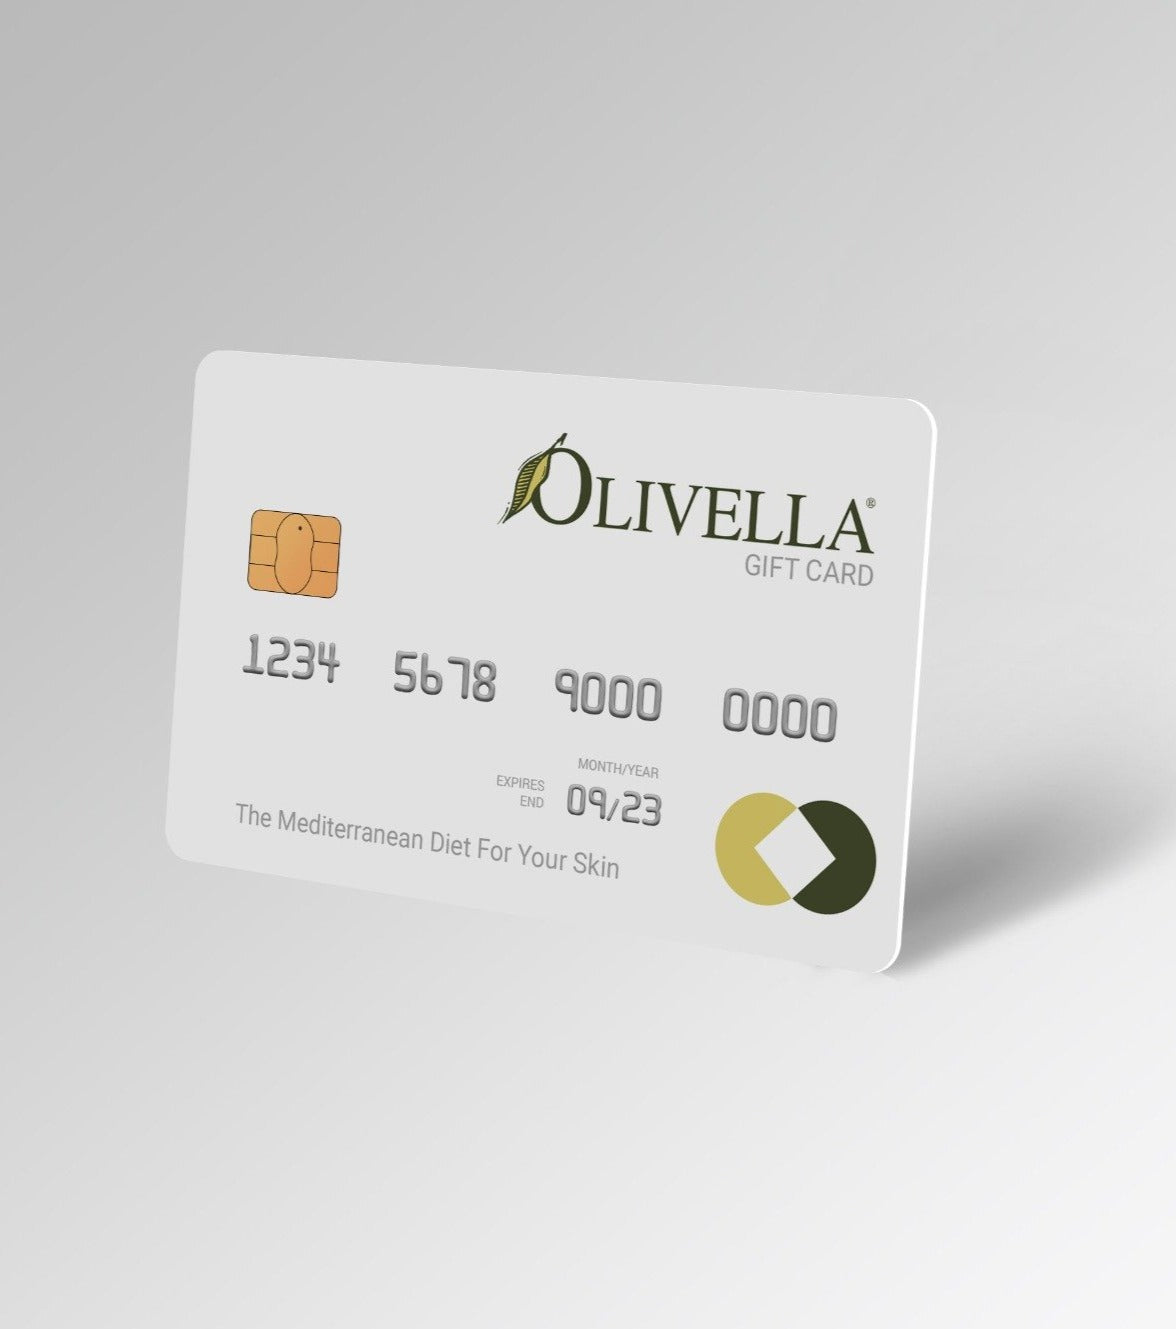 Olivella Gift Card - Olivella